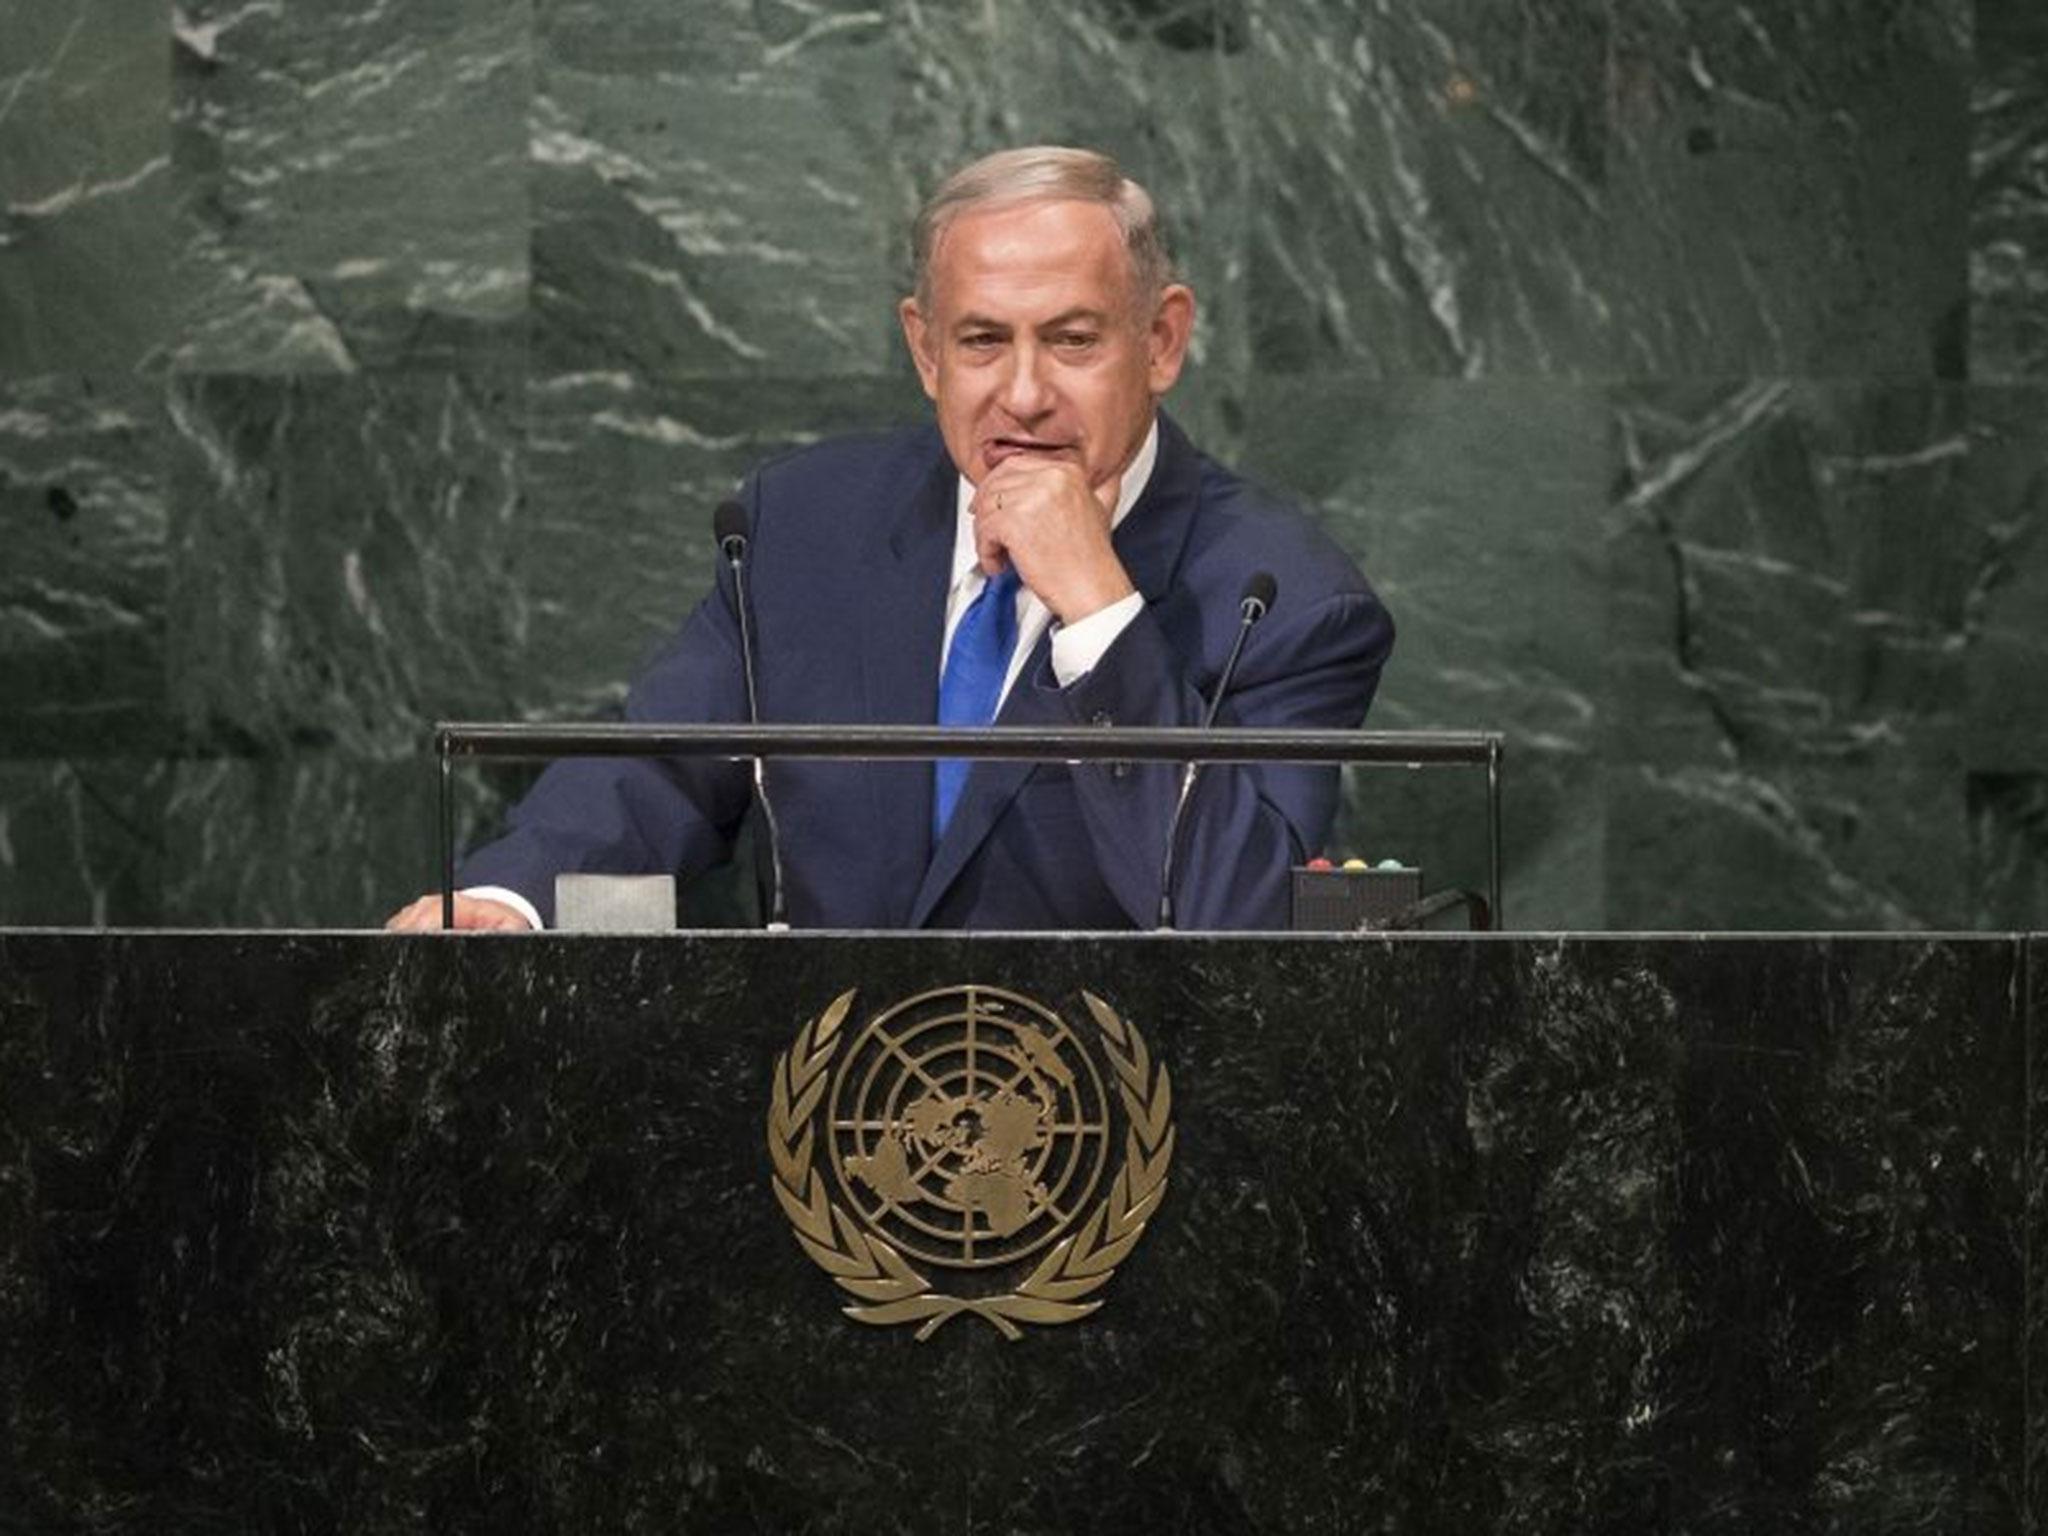 Israeli Prime Minister Benjamin Netanyahu said the draft resolution should be vetoed